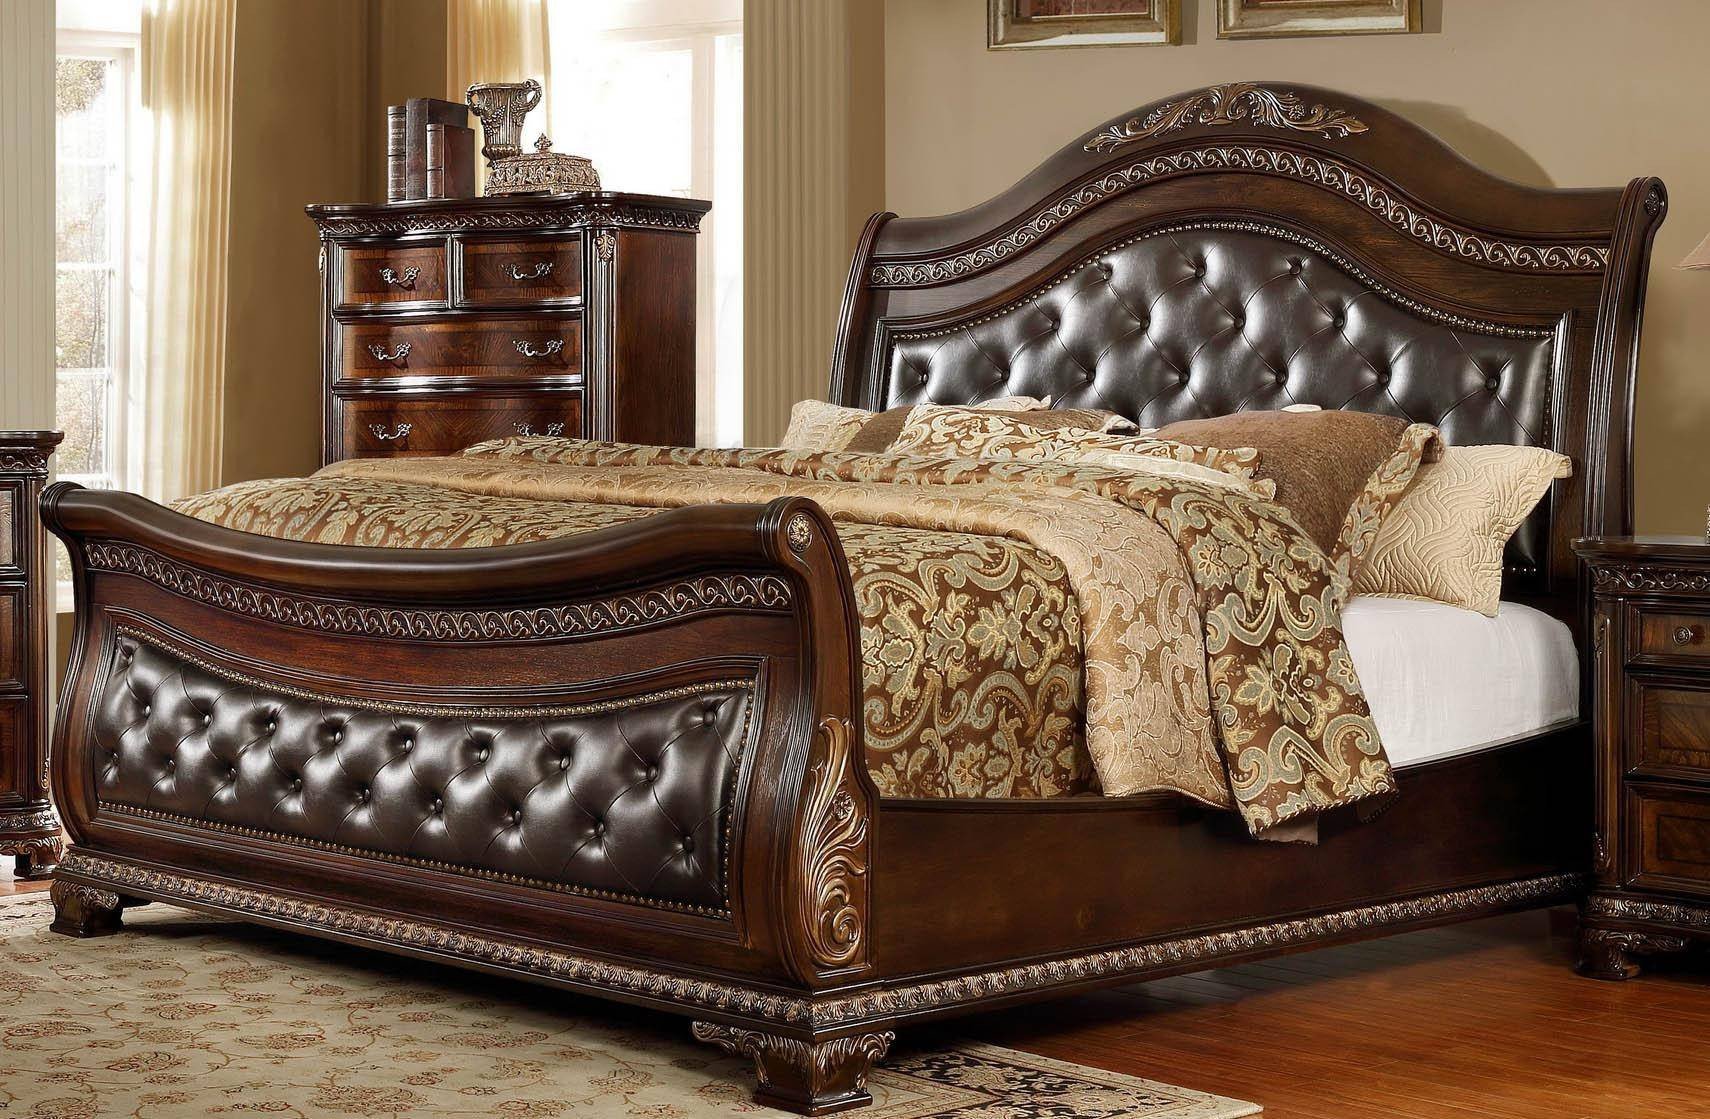 Bedroom Furniture for Sale New Mcferran B9588 King Sleigh Bed In Oak Veneers Dark Cherry Finish Leather